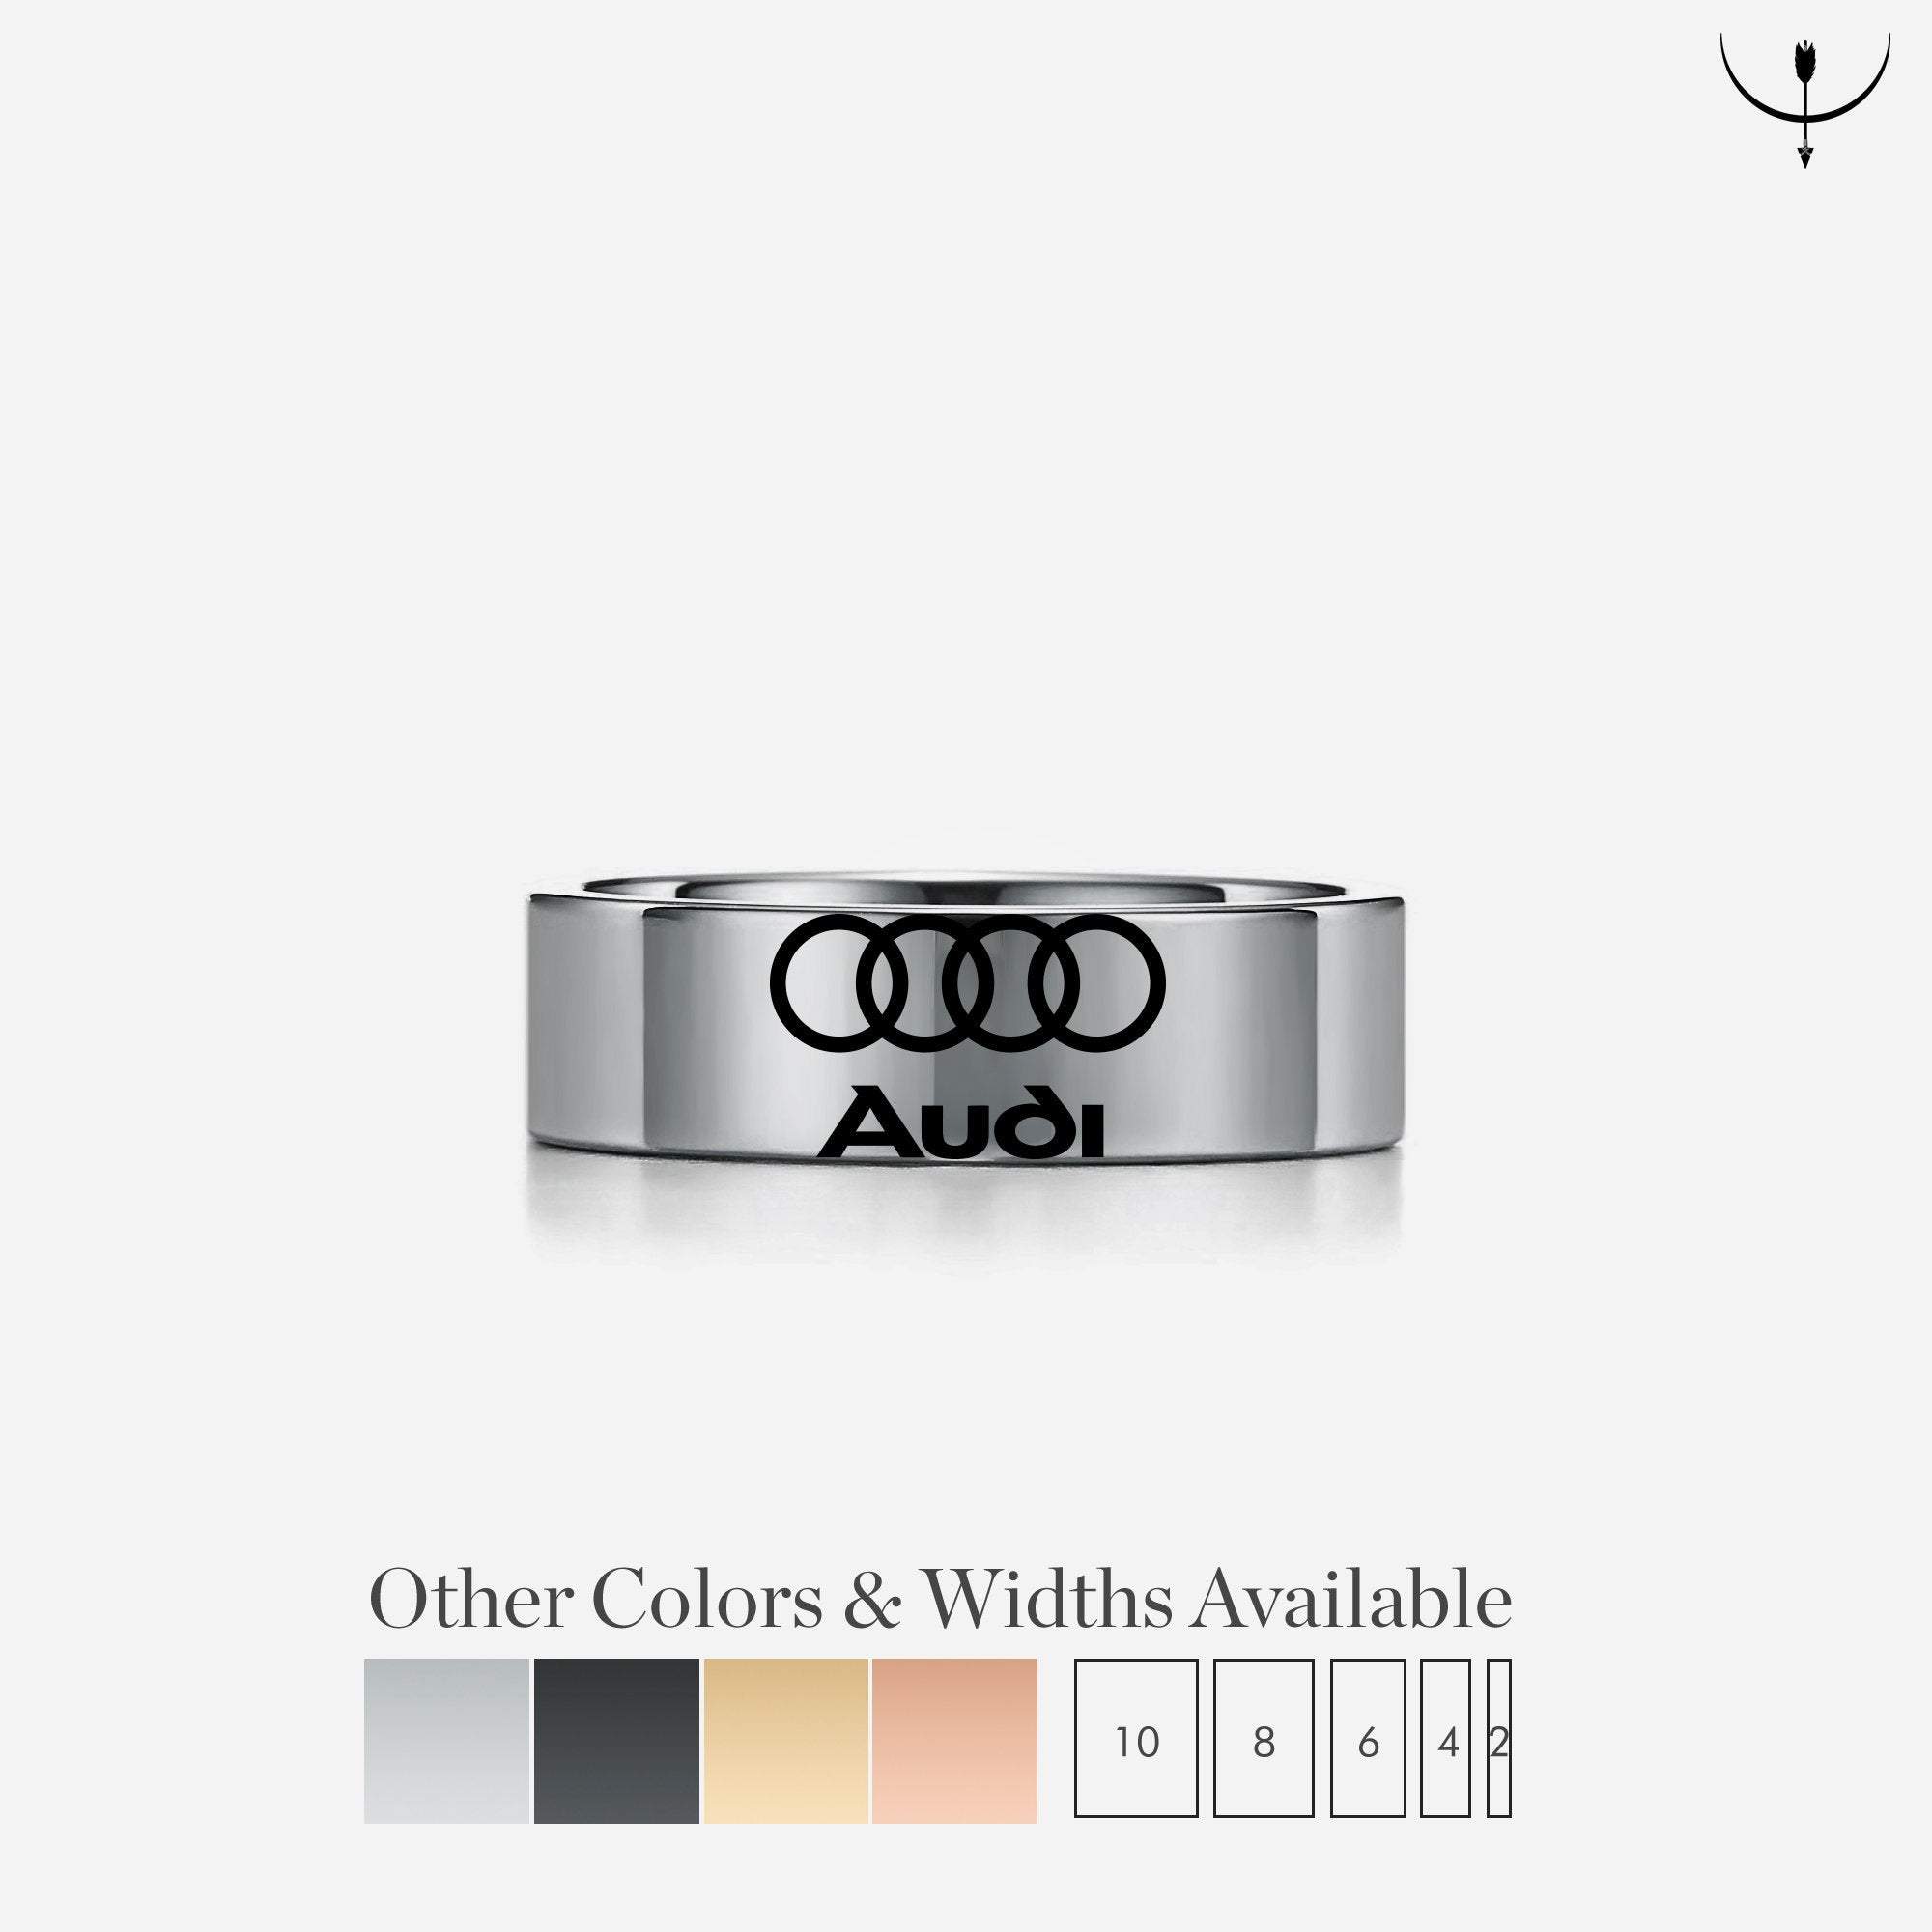 Audi Benz Ring, Luxury Car Symbol Jewelry, Audi Wedding Band, Audi Symbol  Ring